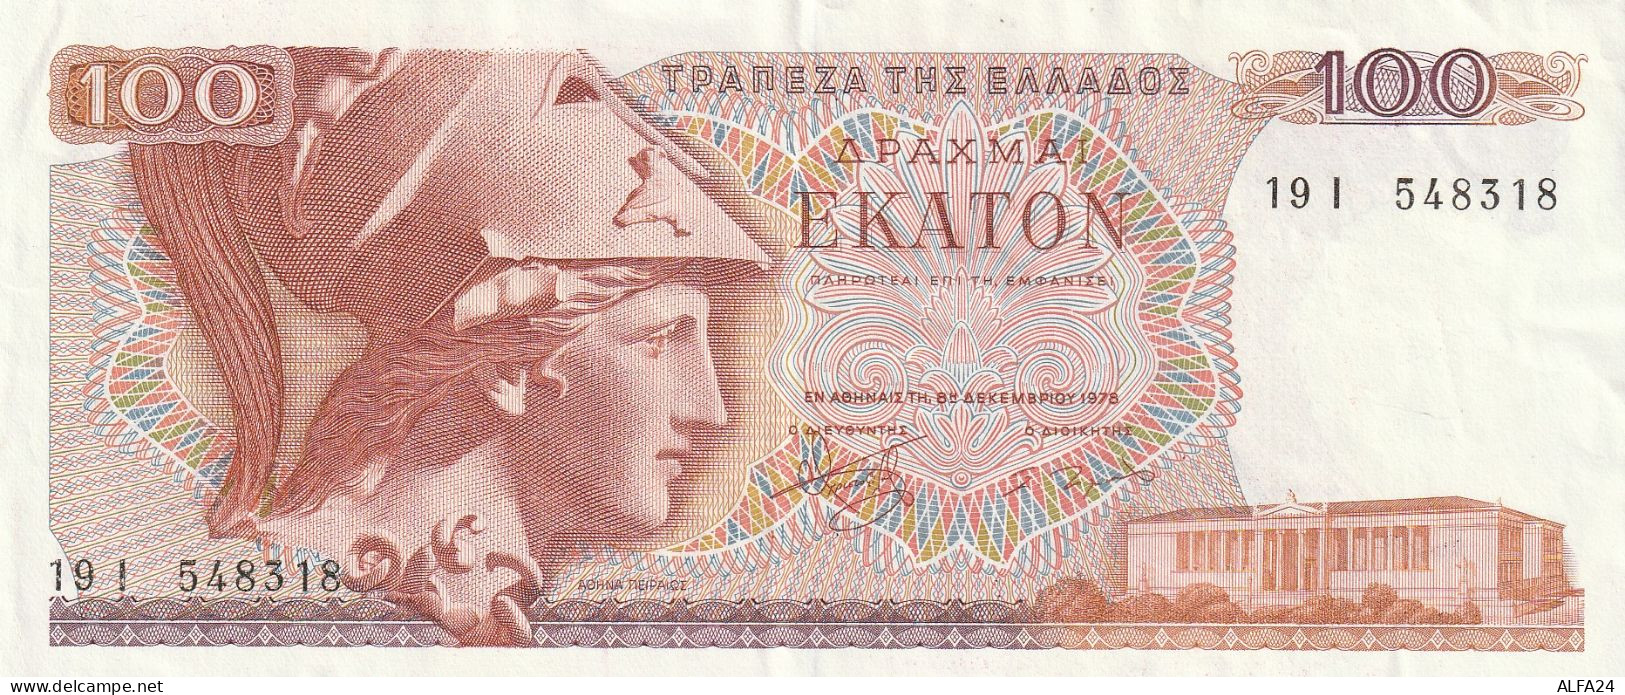 BANCONOTA GRECIA 100 AUNC  (B_585 - Greece